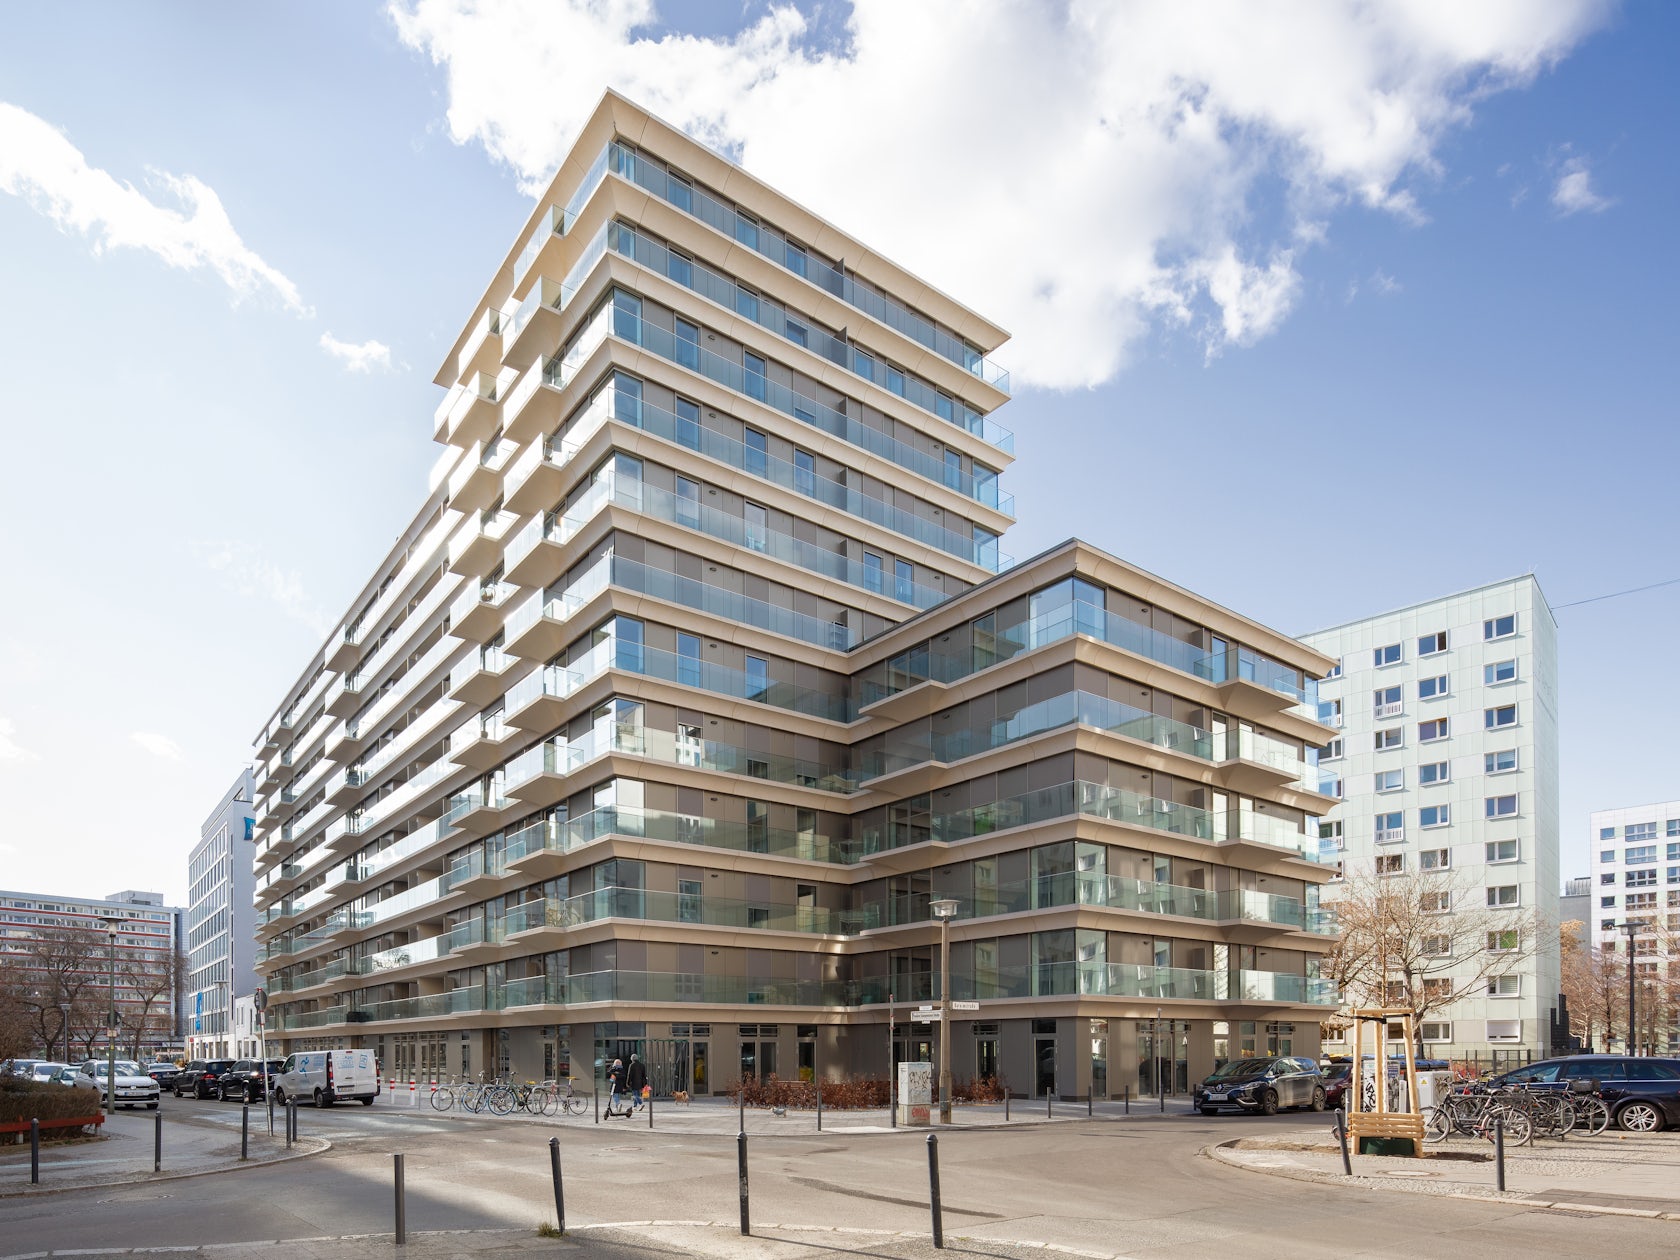 TCHOBAN VOSS Architekten Designs Light, Open and Democratic Koenigstadt-Quartier Residential High-Rise